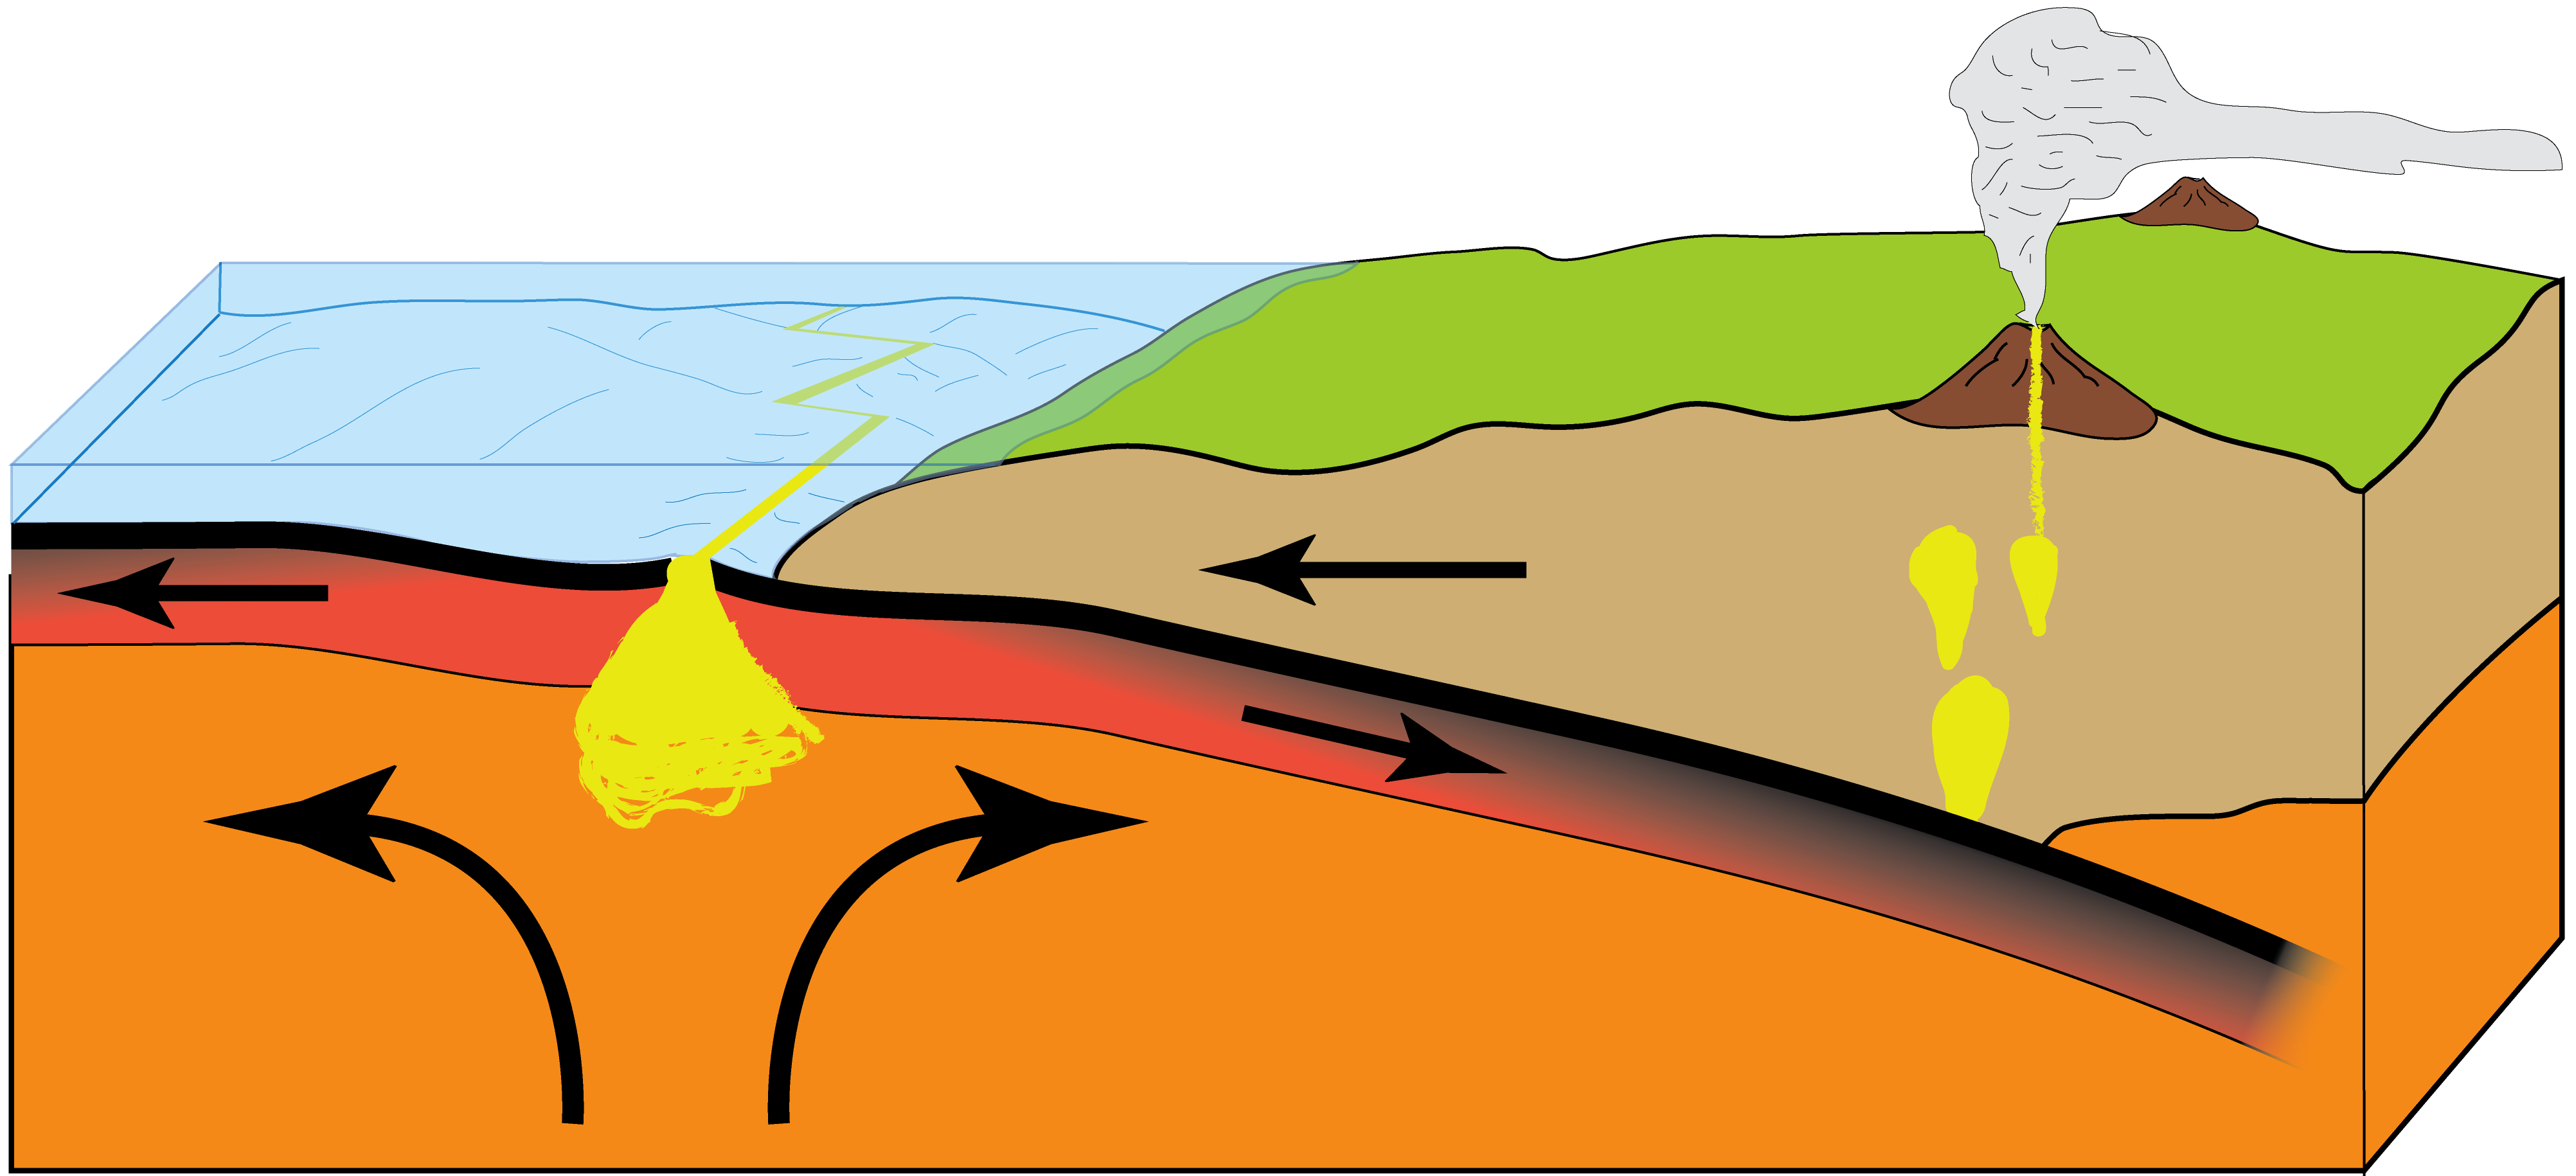 Diagram of plate subduction